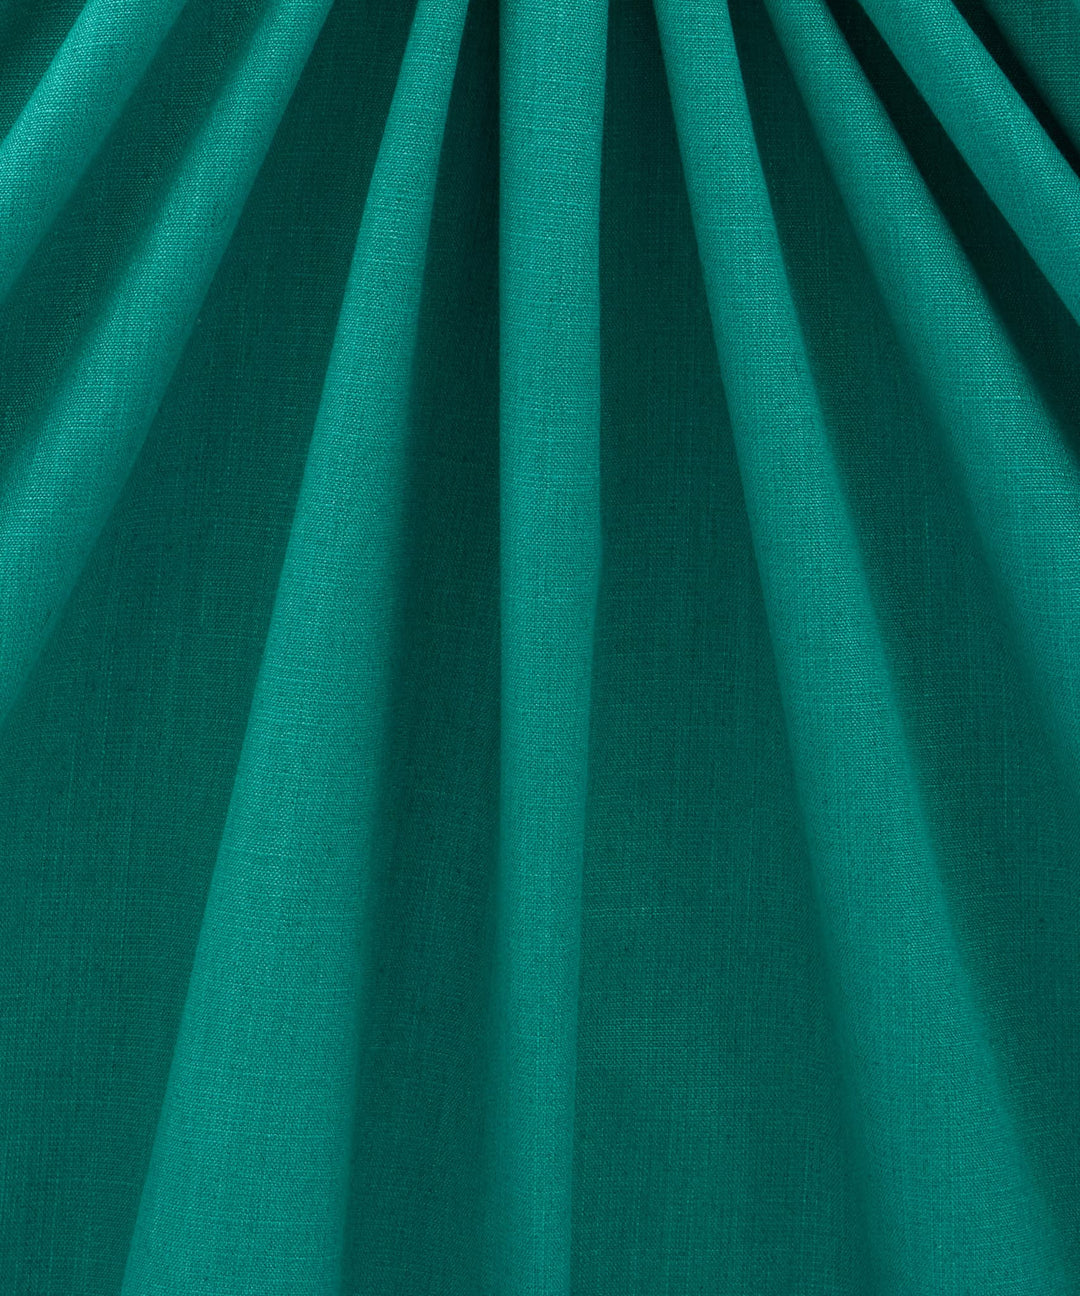 liberty-lustre-linen-interior-fabrics-jade-green-blue-teal-plain-colour-upholsterey-curtains-cushions